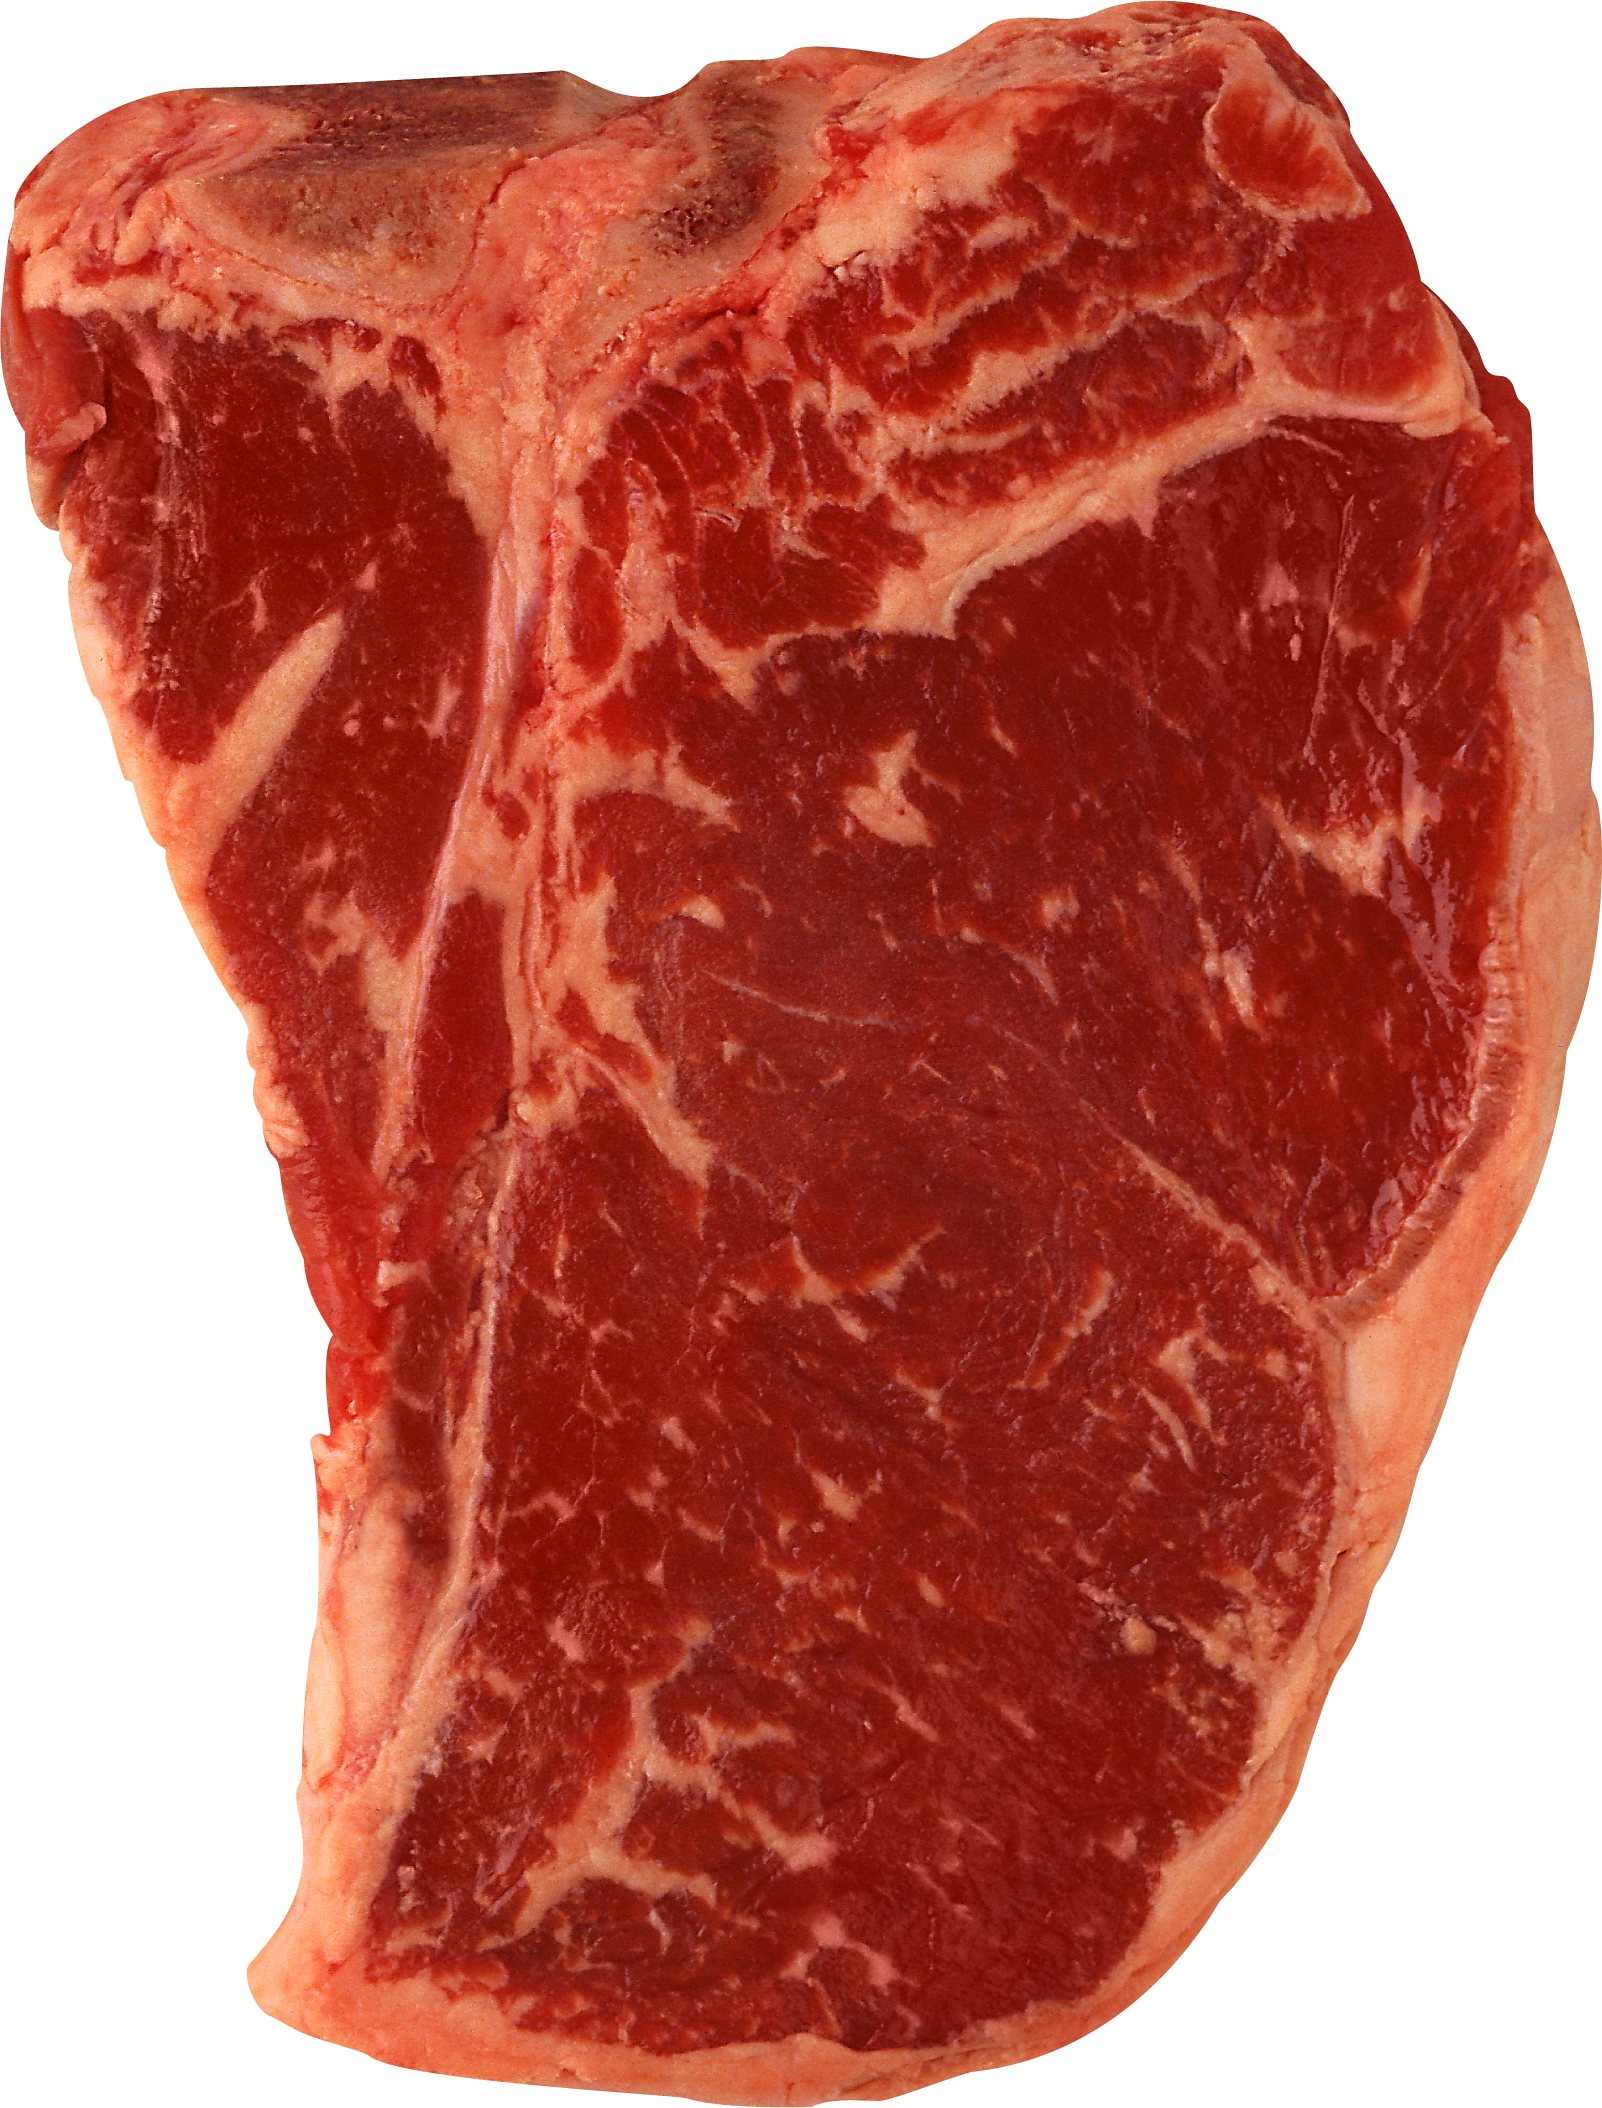 Meat clipart uncooked food. Steak cattle clip art